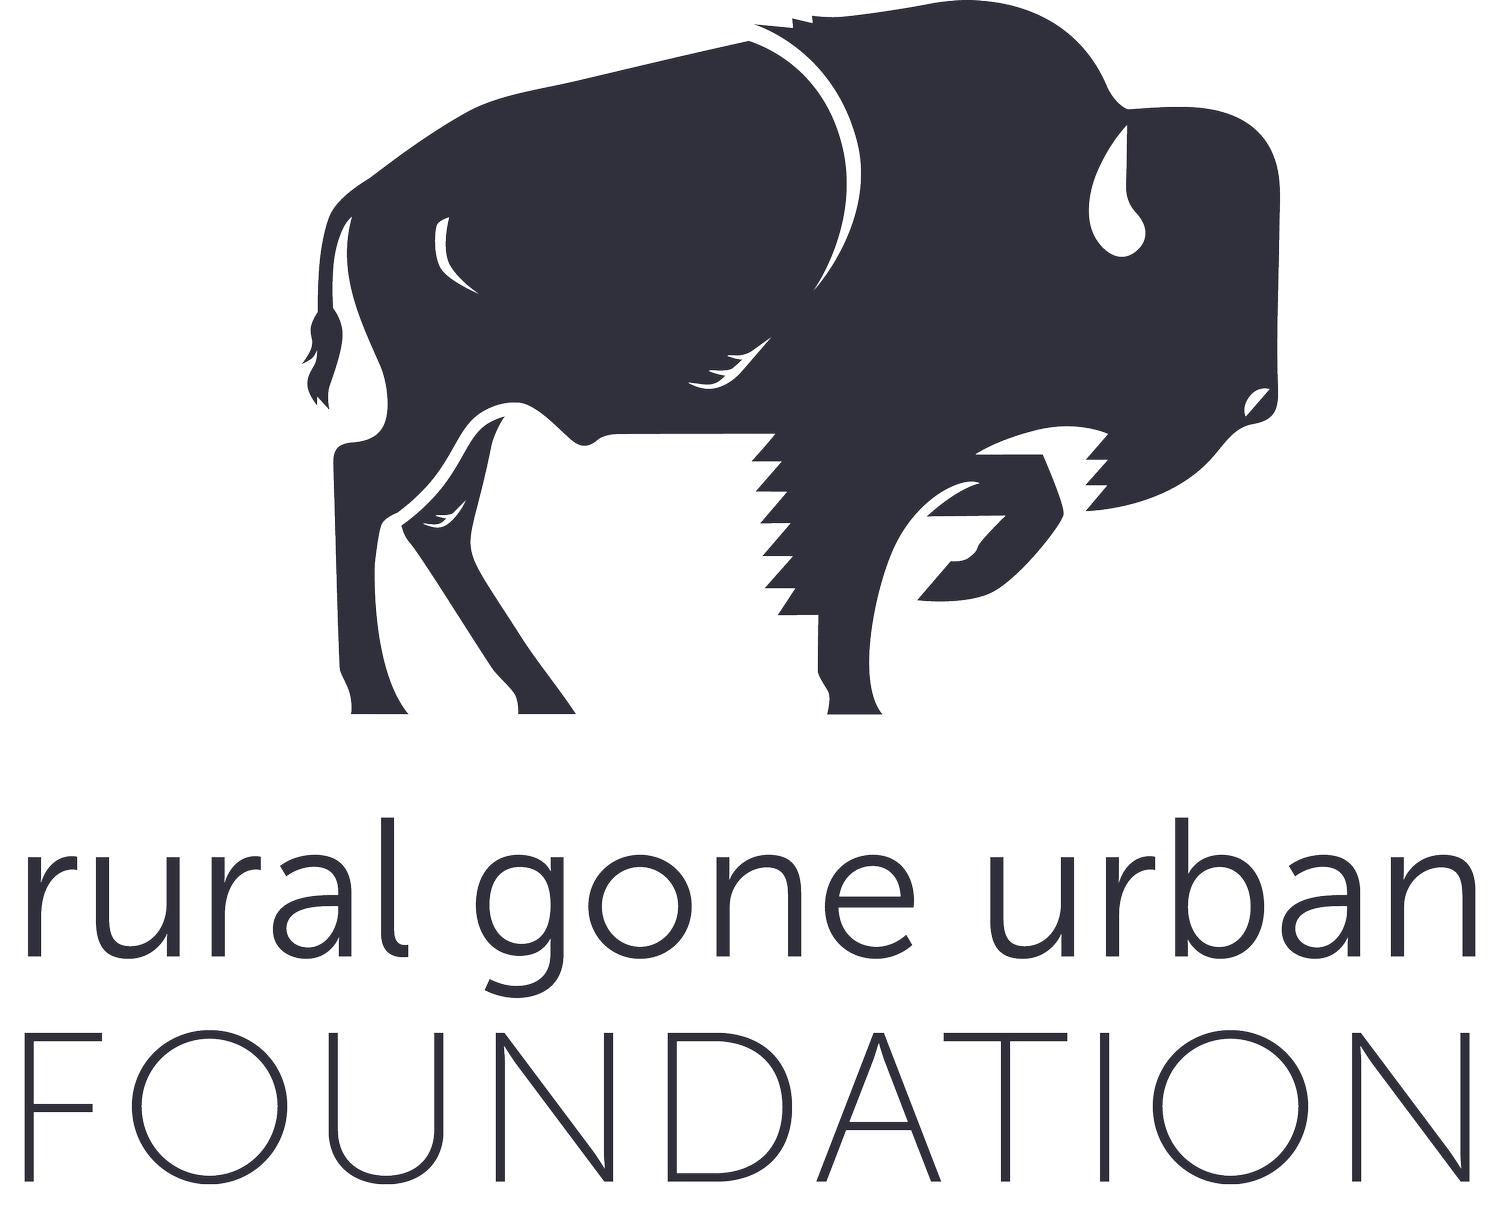 The Rural Gone Urban Foundation